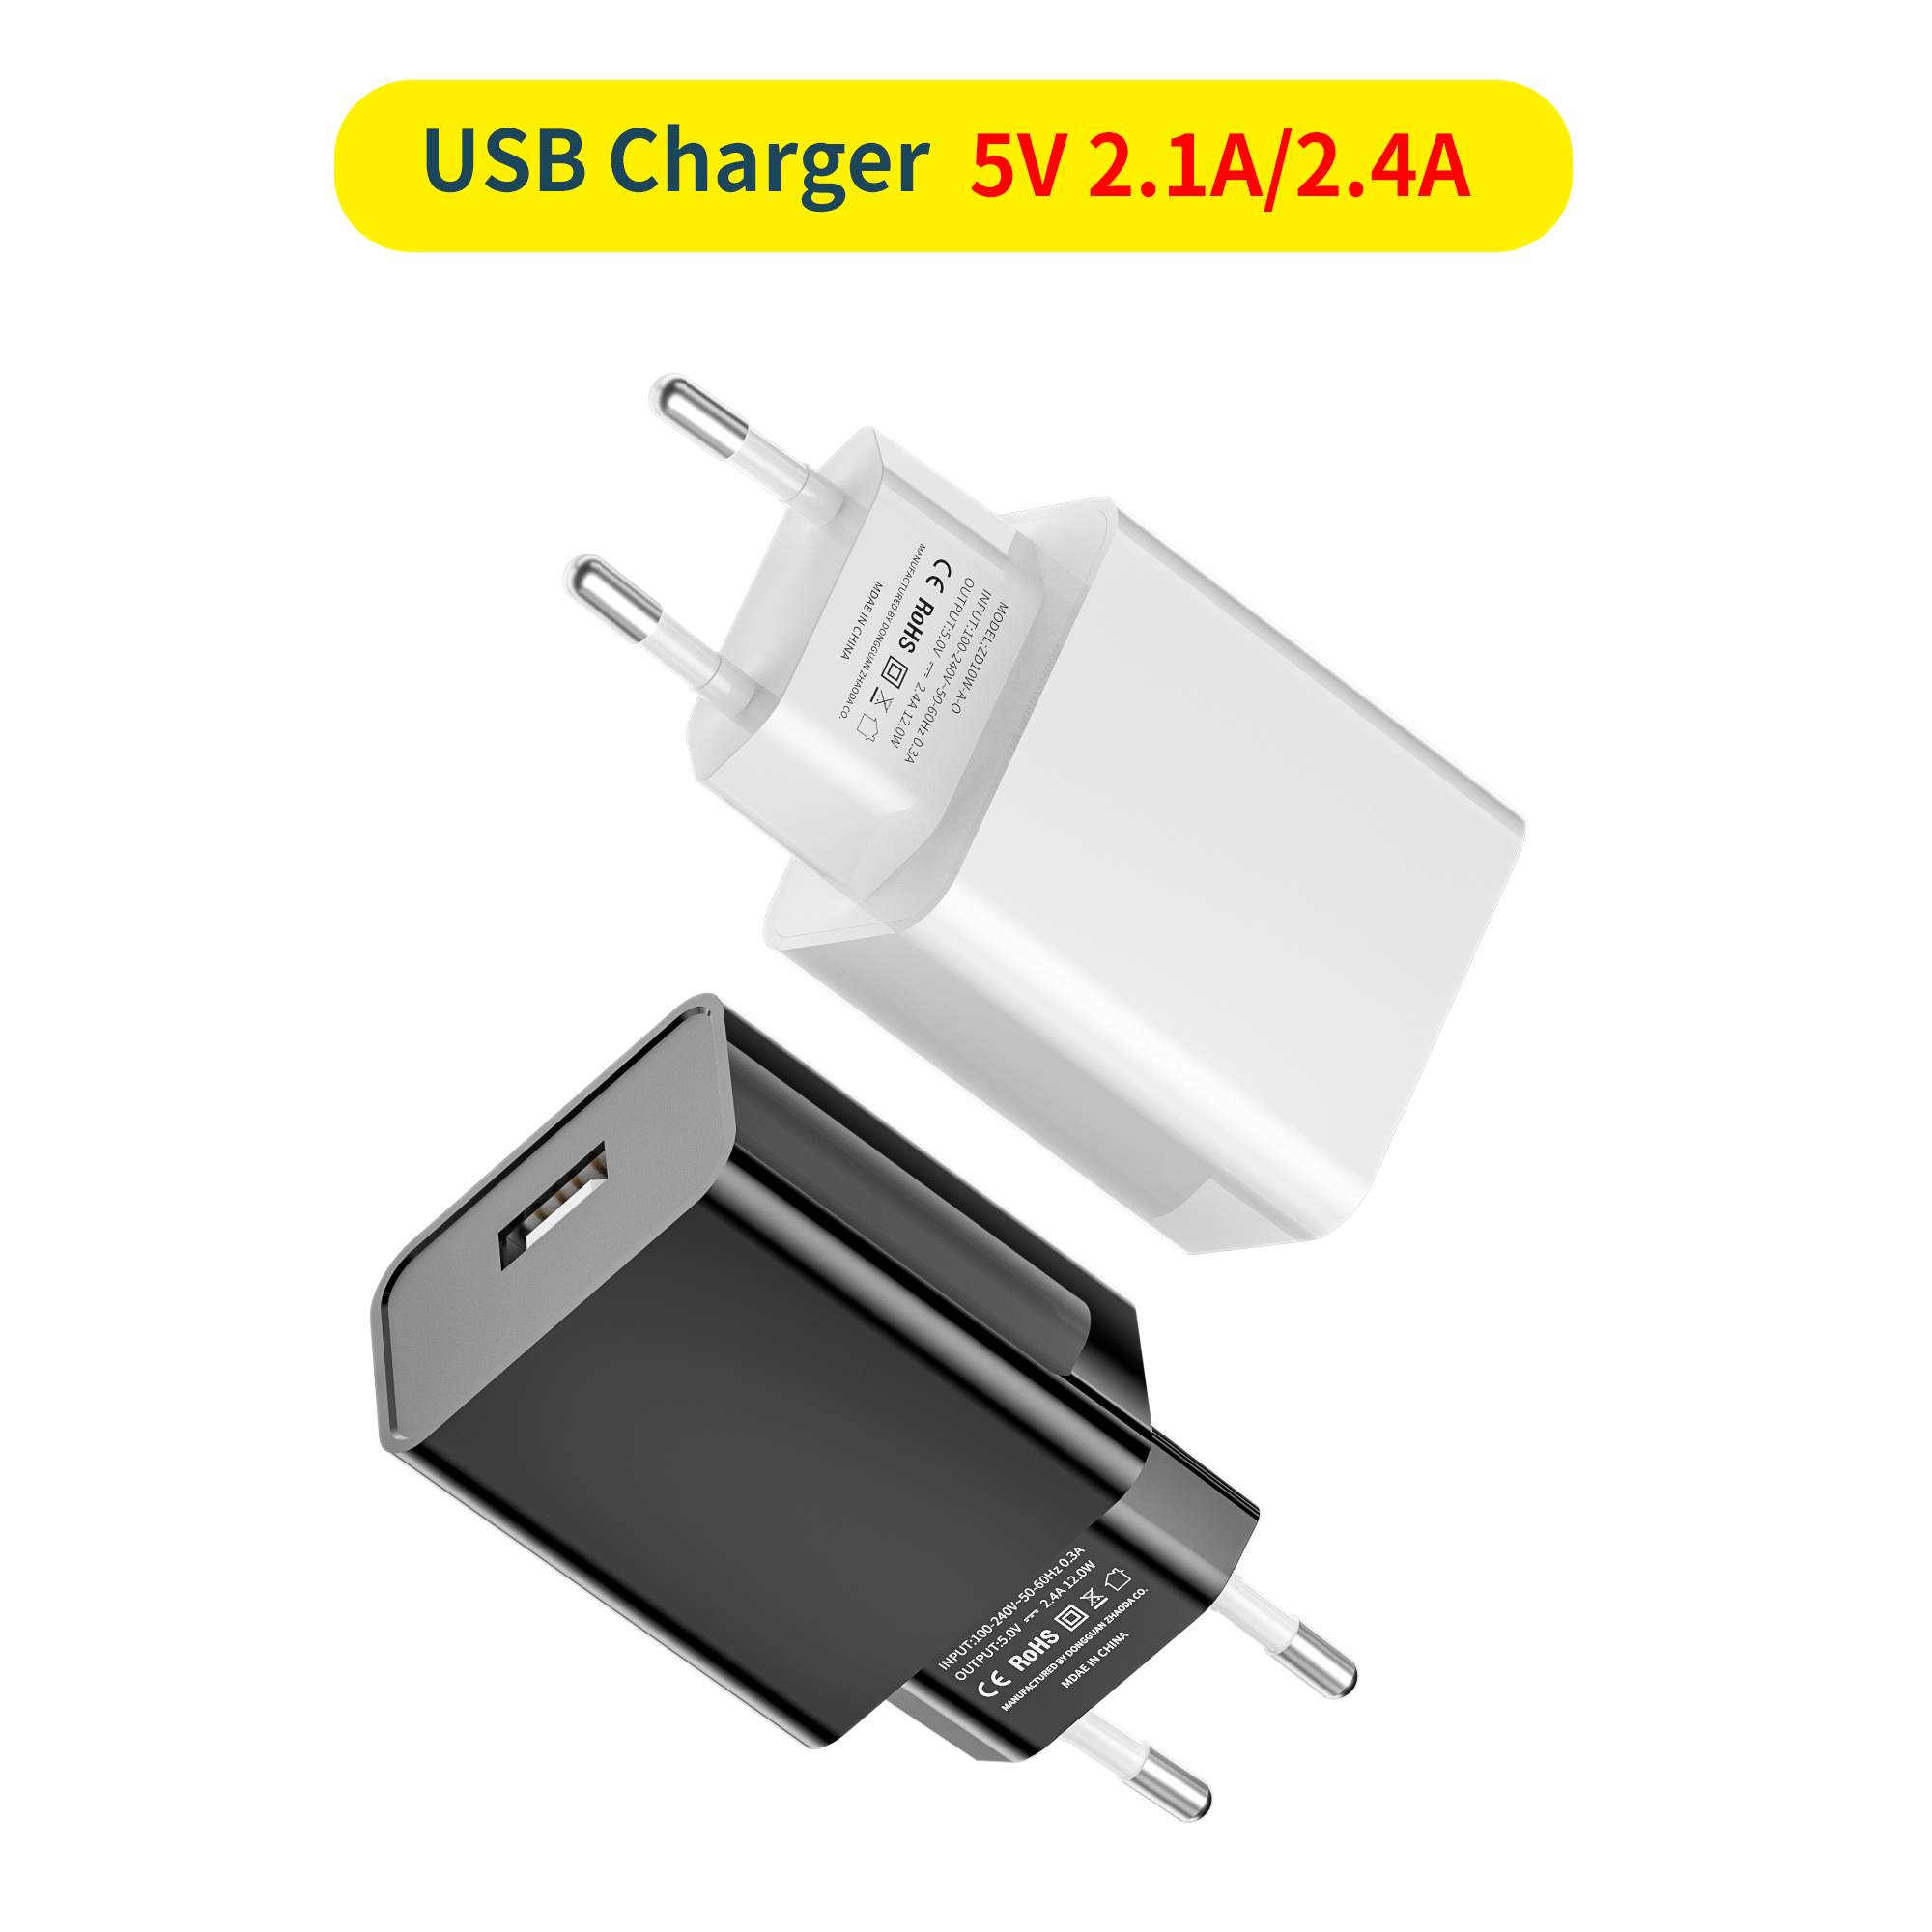 12W USB Cargo de la UE Eu Plug Adaptador de viaje de viaje europeo Cargador estándar europeo para iPhone, Samsung, Tableta de iPad